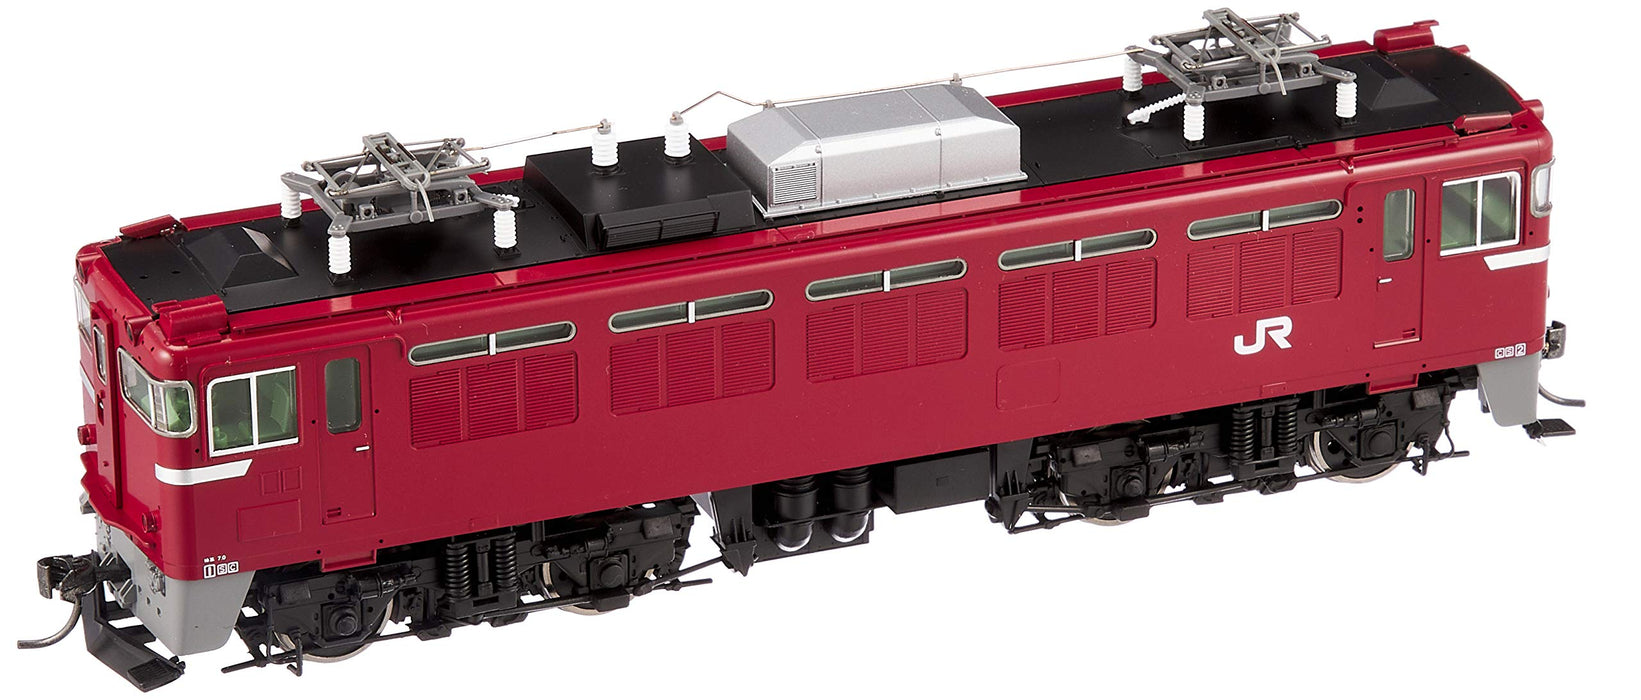 Tomytec Tomix Ho Spurweite Grau Elektrolokomotive Modell ED79-0 - Eisenbahn HO-2014